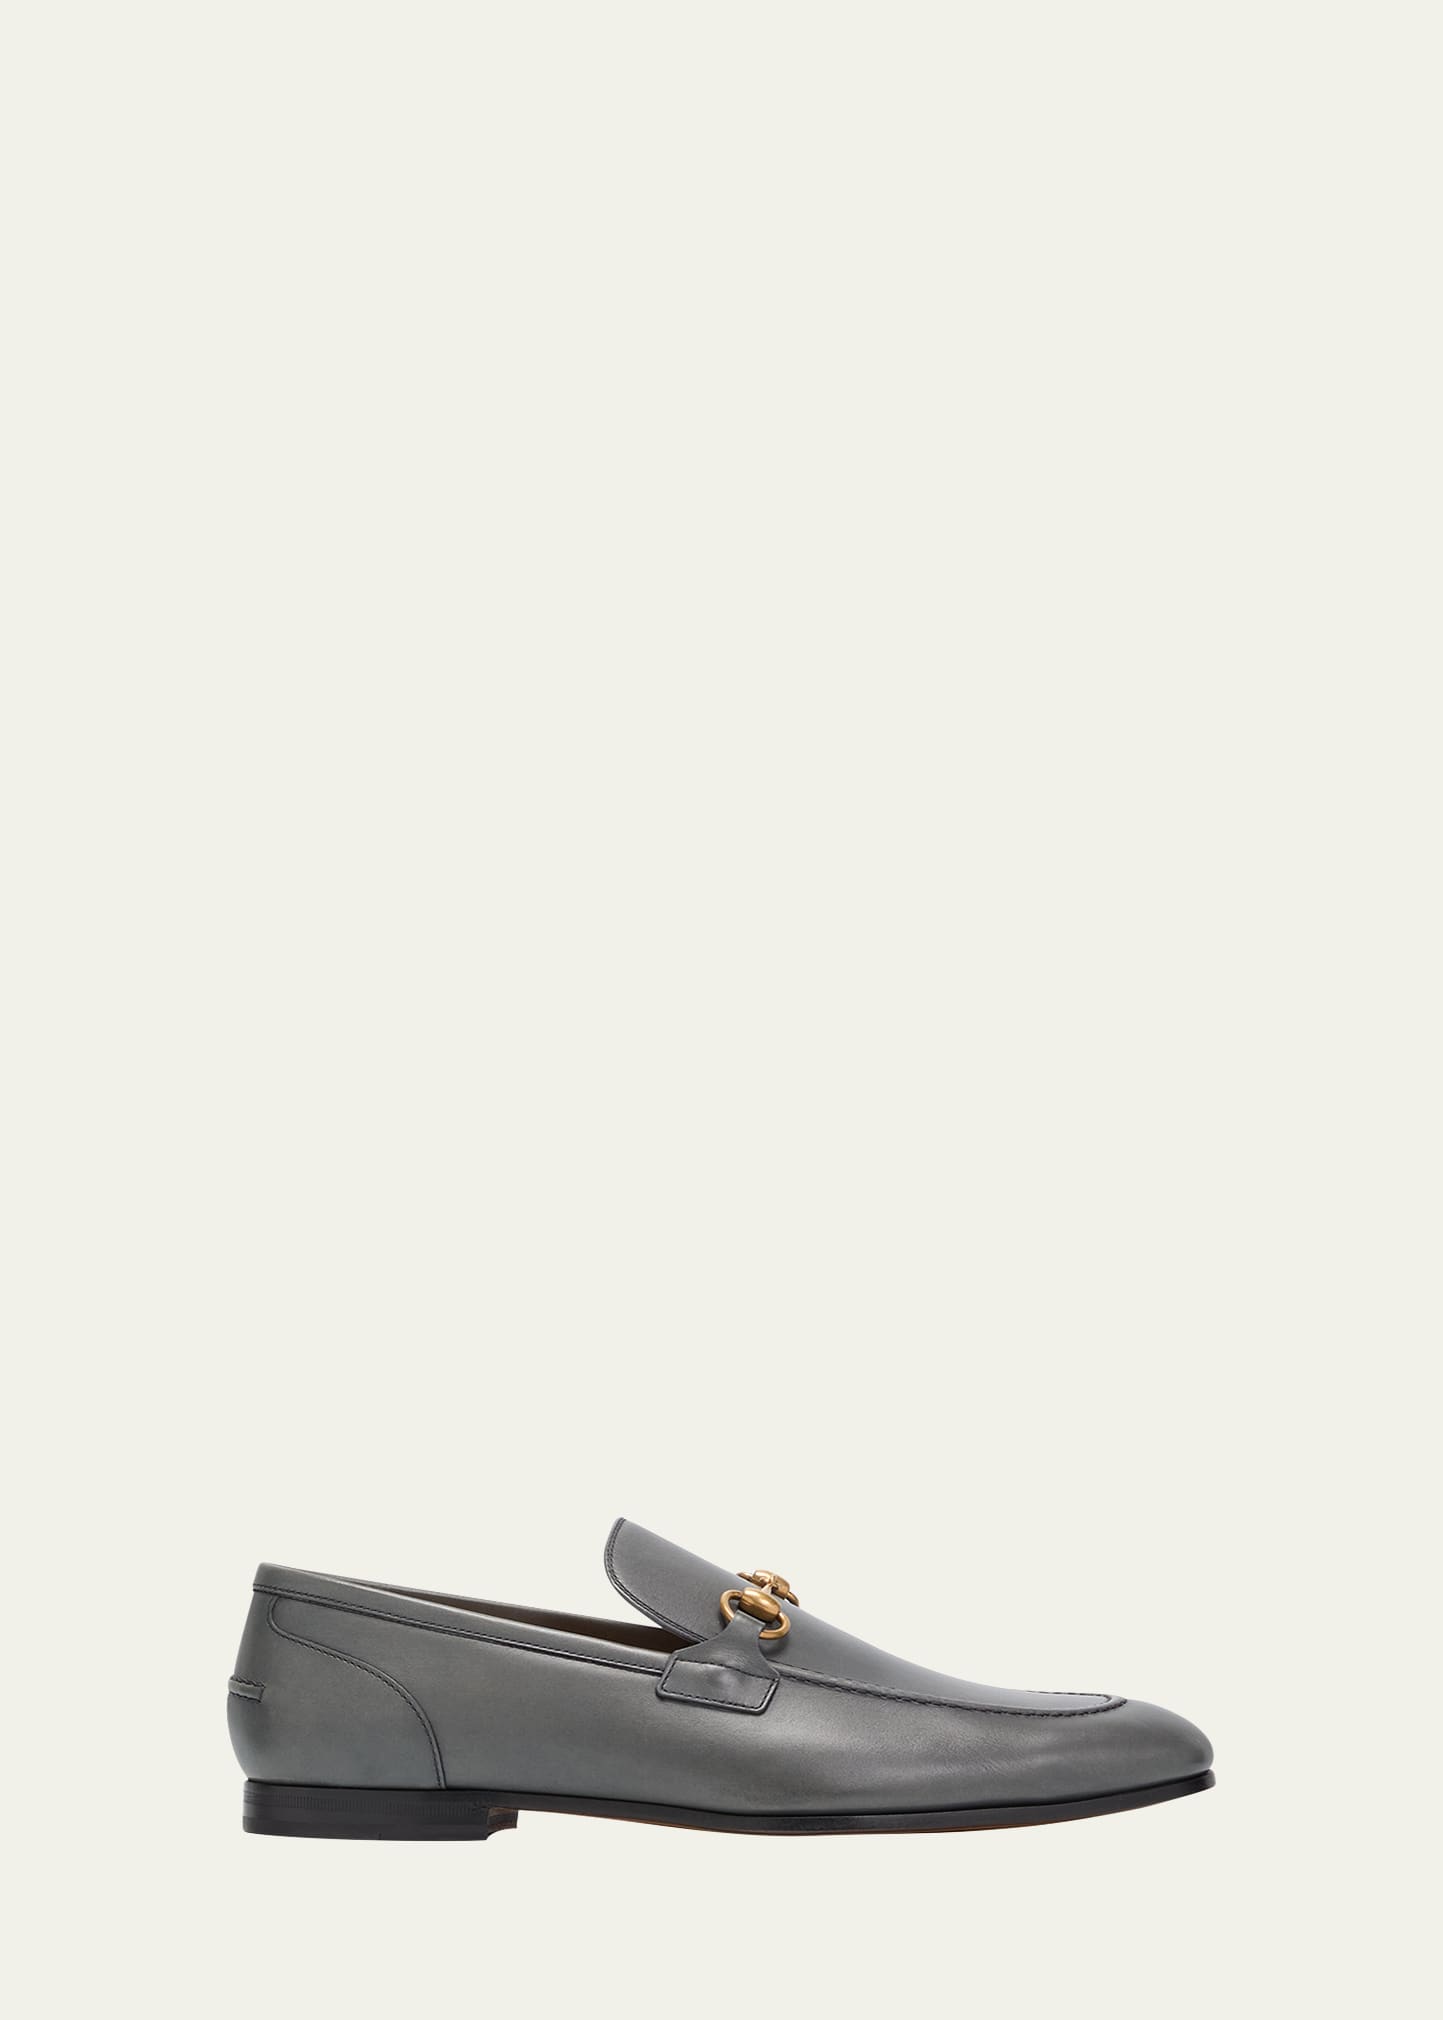 Gucci Men's Jordaan Leather Loafer In Graphite Grey